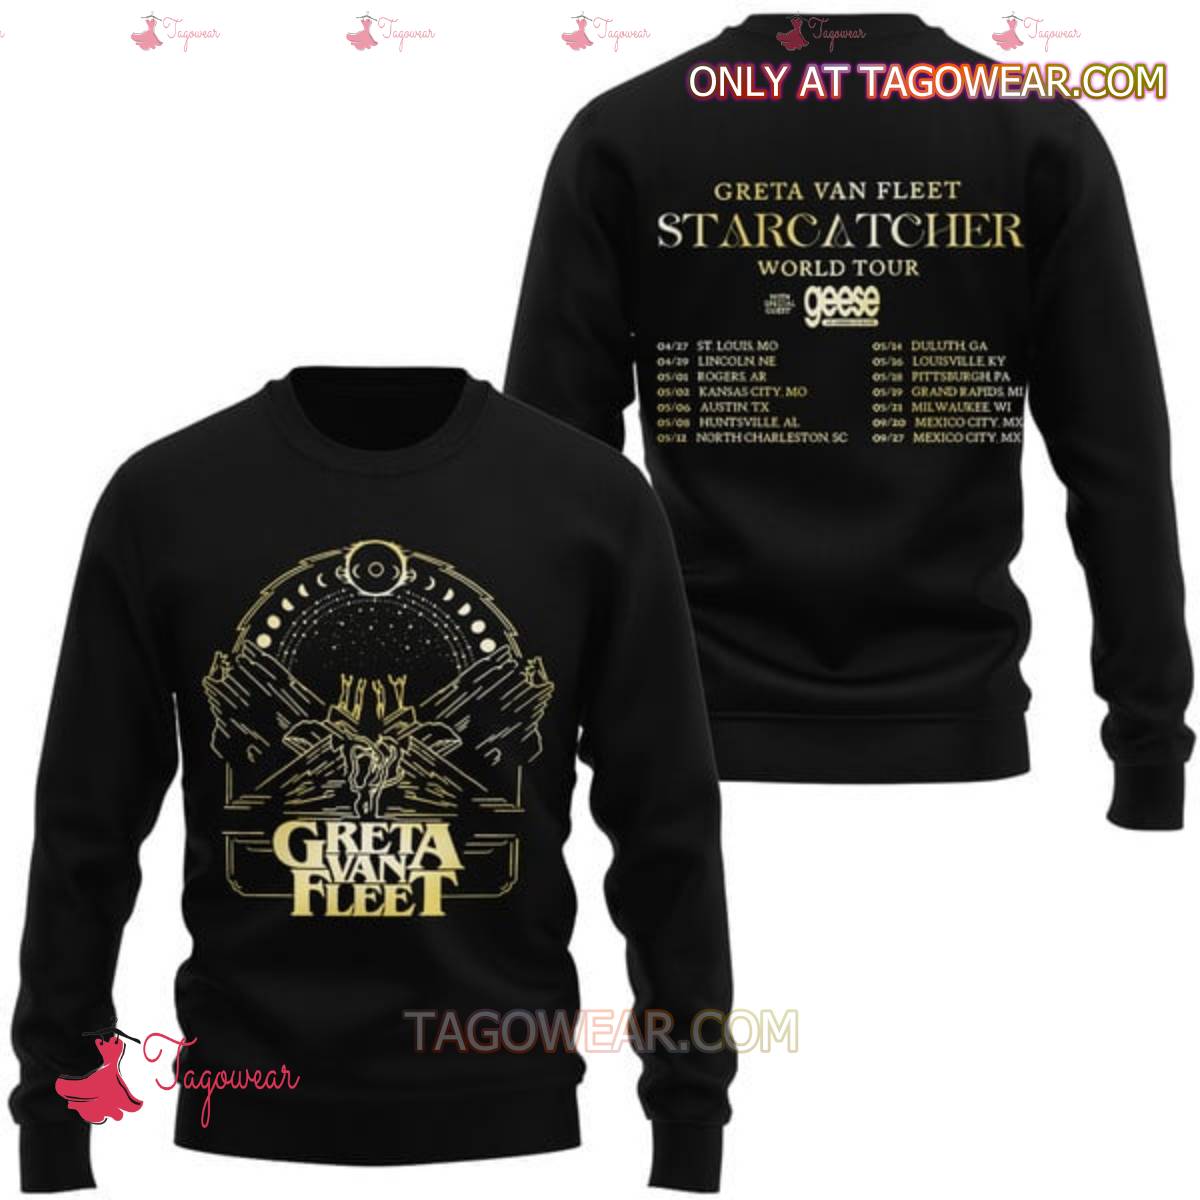 Greta Van Fleet Starcatcher World Tour With Geese T-shirt, Hoodie